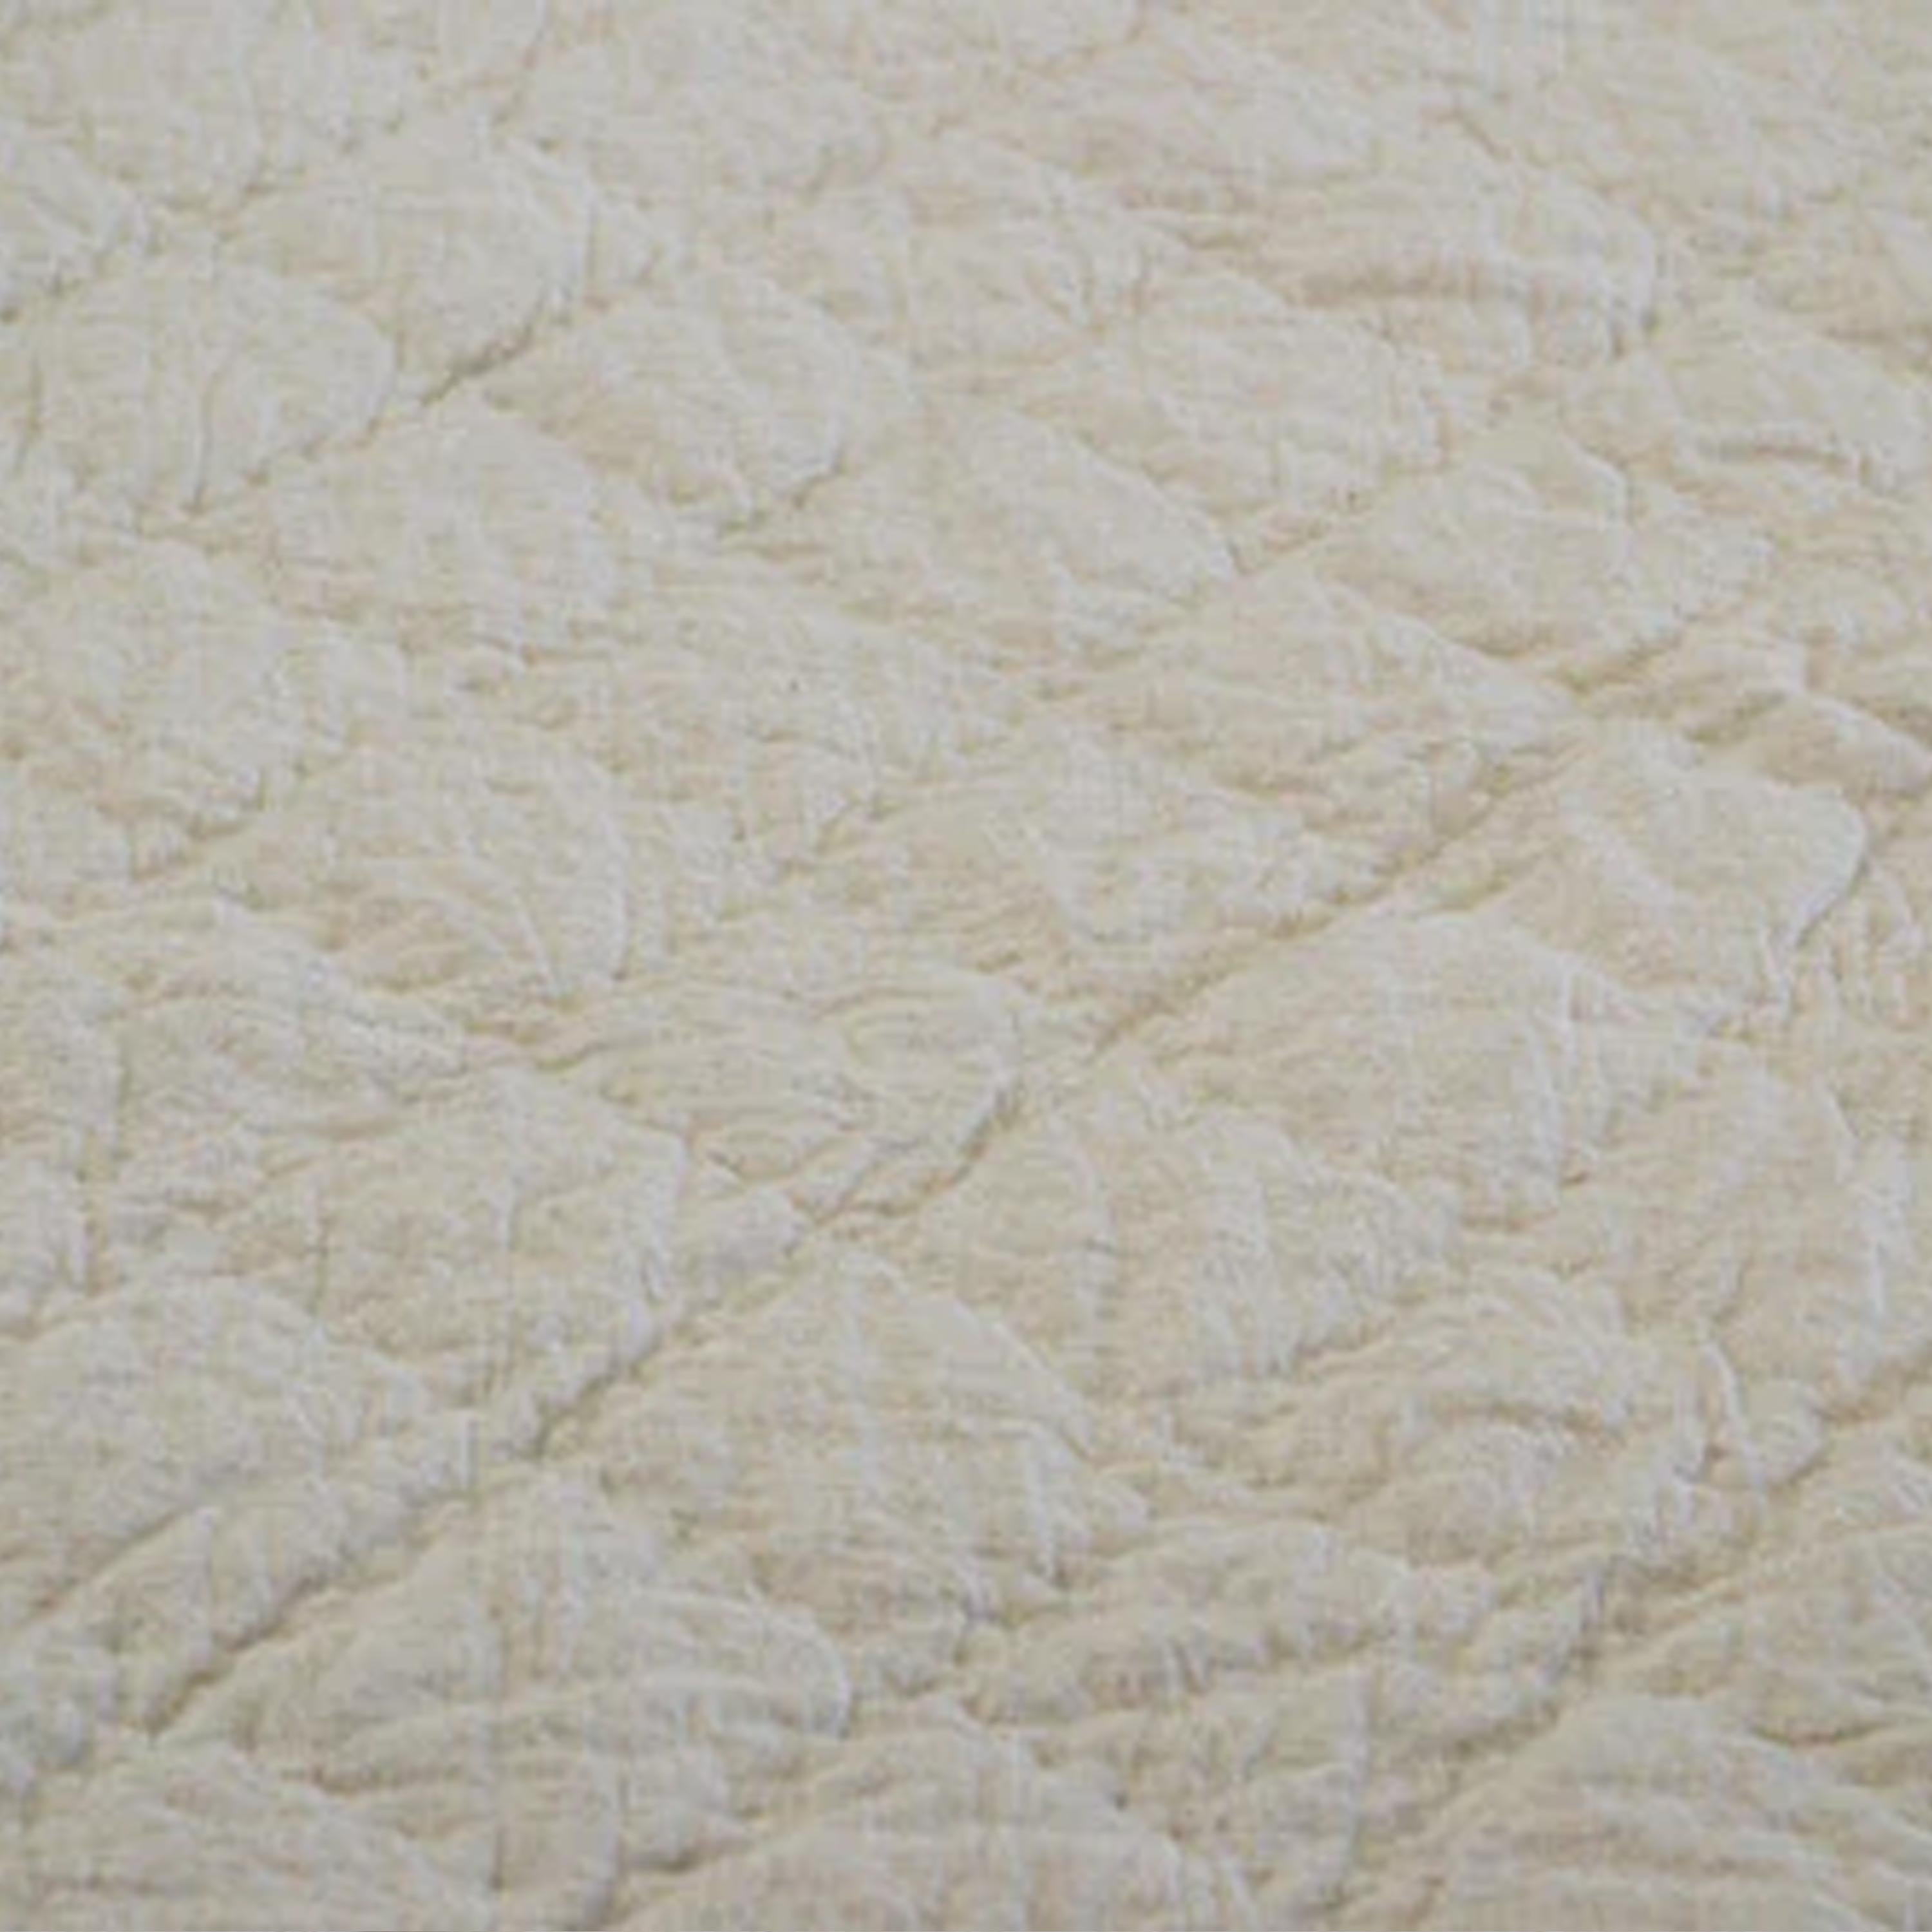 Handmade Oatmeal Linen Quilt in Diamond Pattern